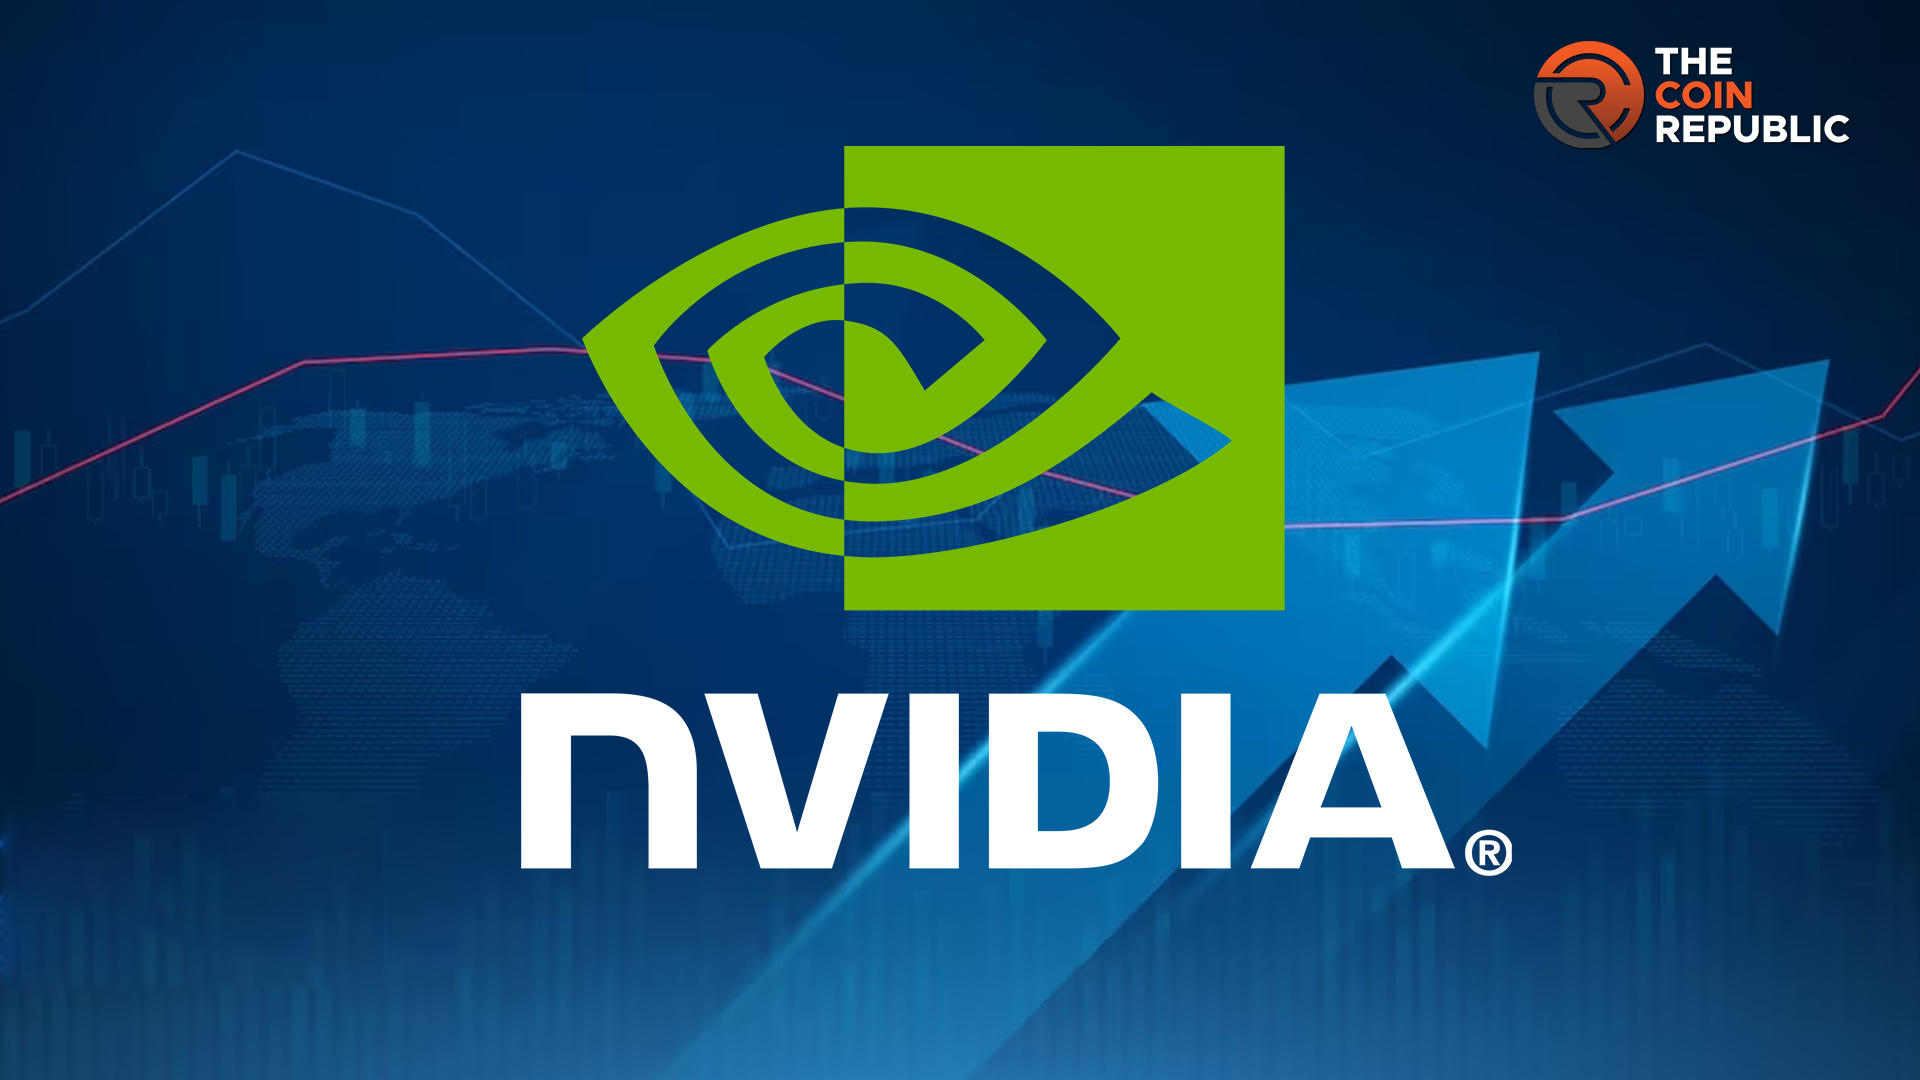 NVDA Stock: Nvidia Makes Headlines After 265% Earnings Growth